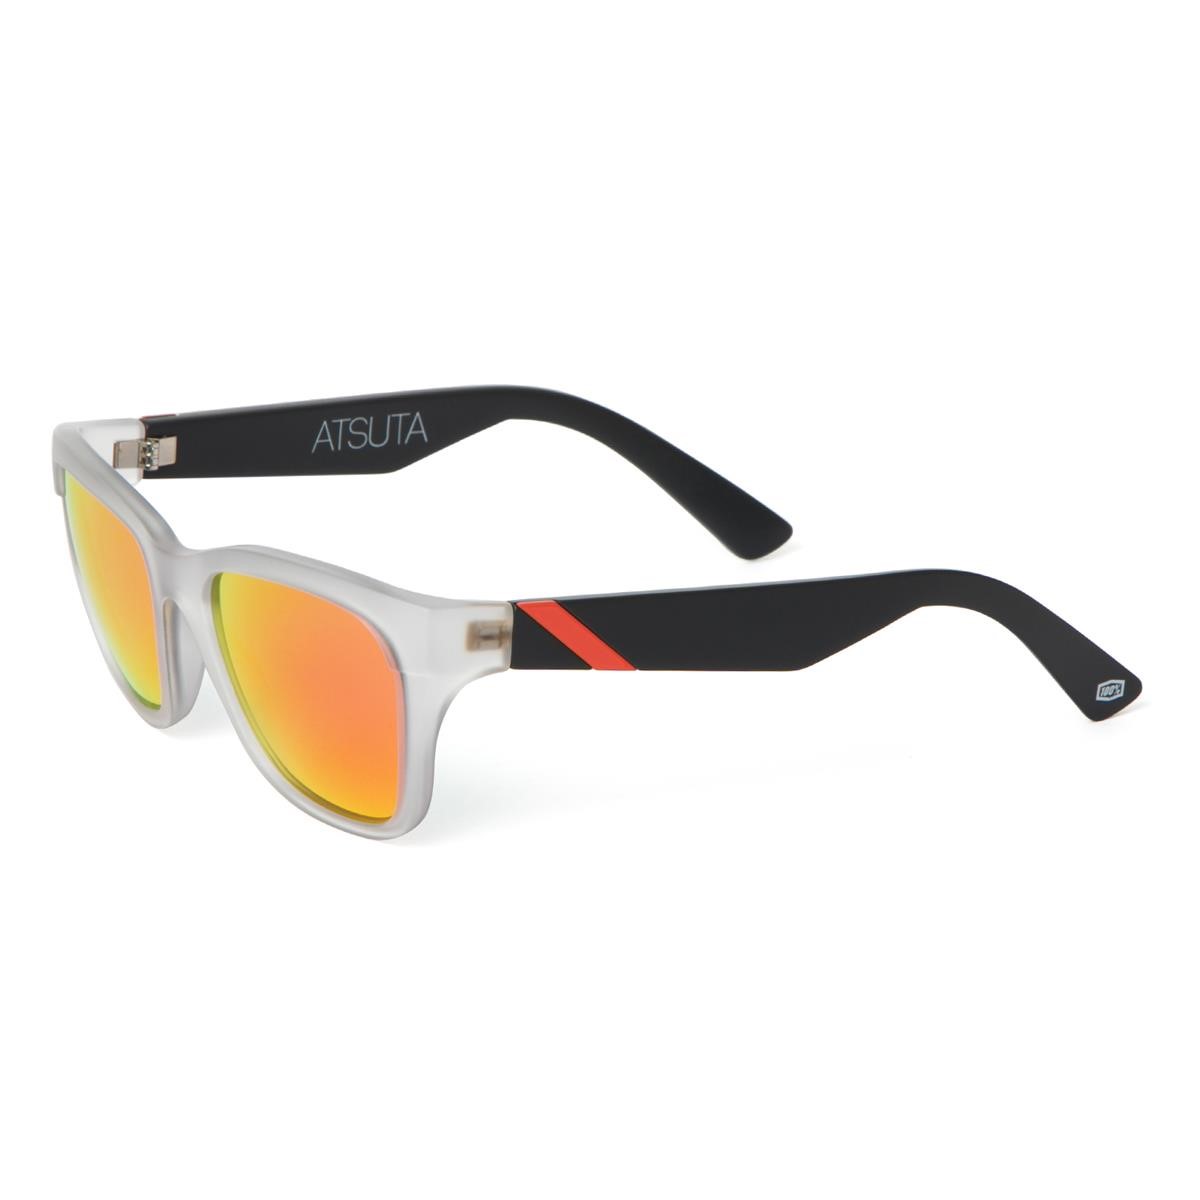 100% Sunglasses The Atsuta Grey/Orange mirror